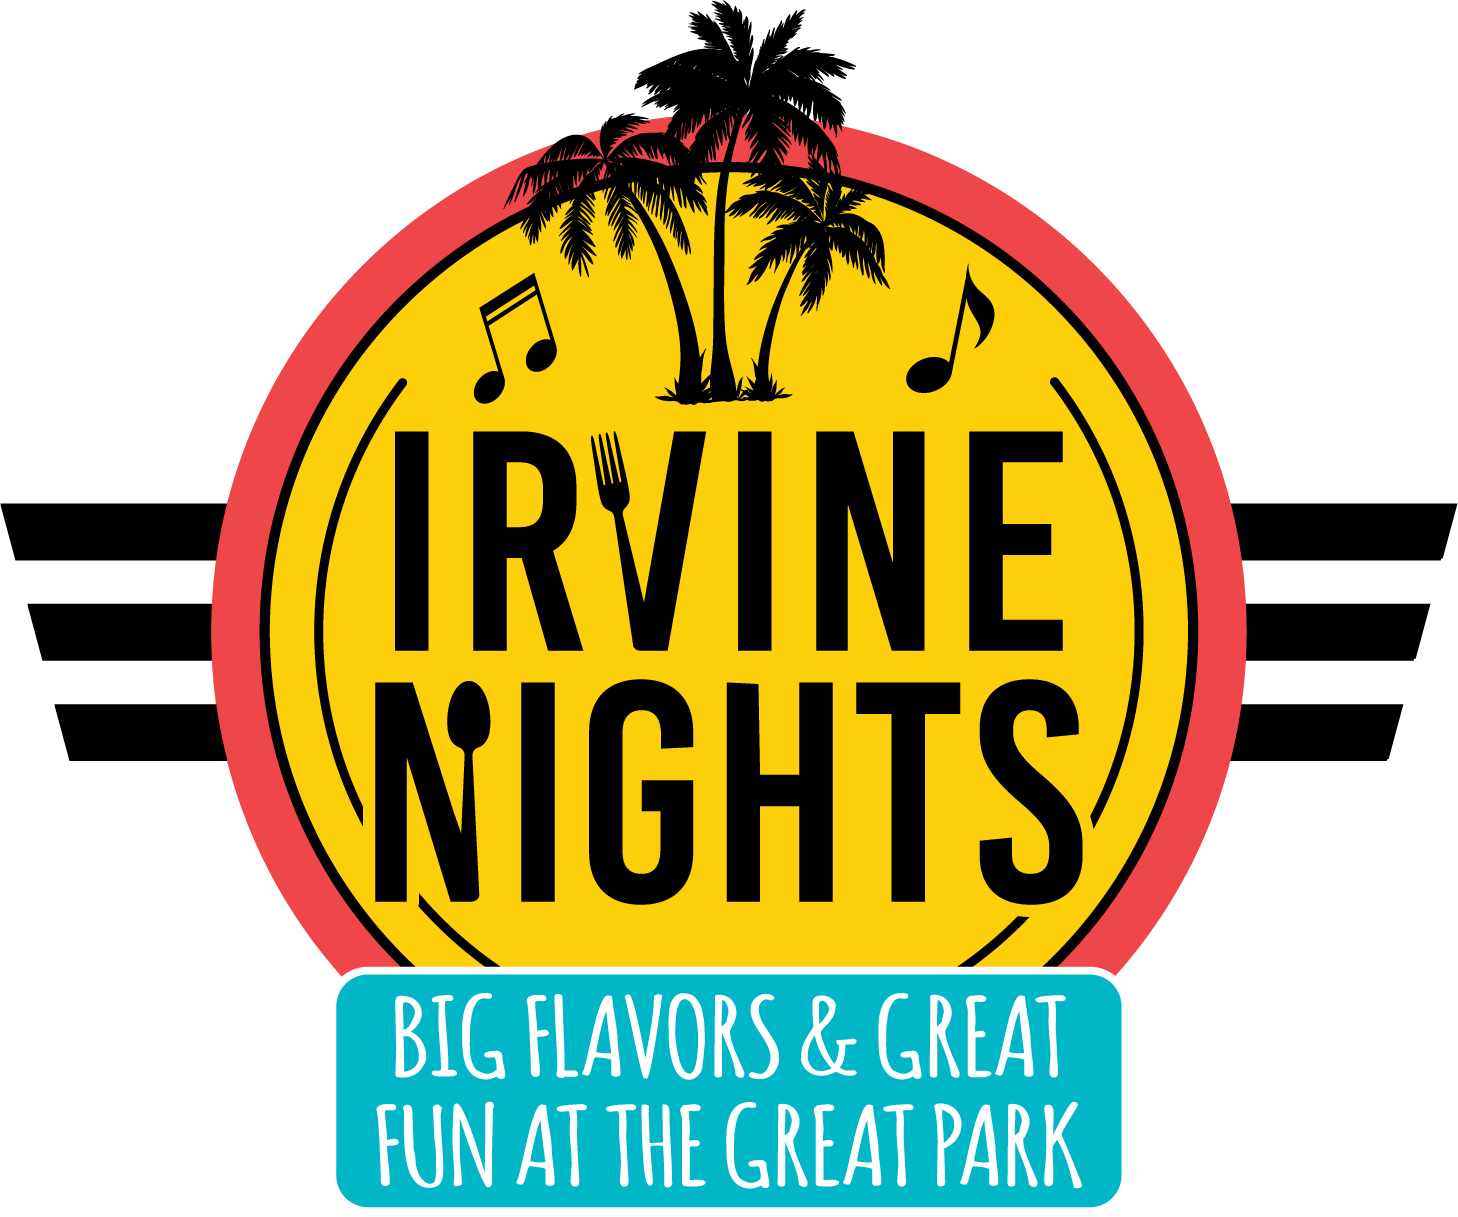 Irvine Nights